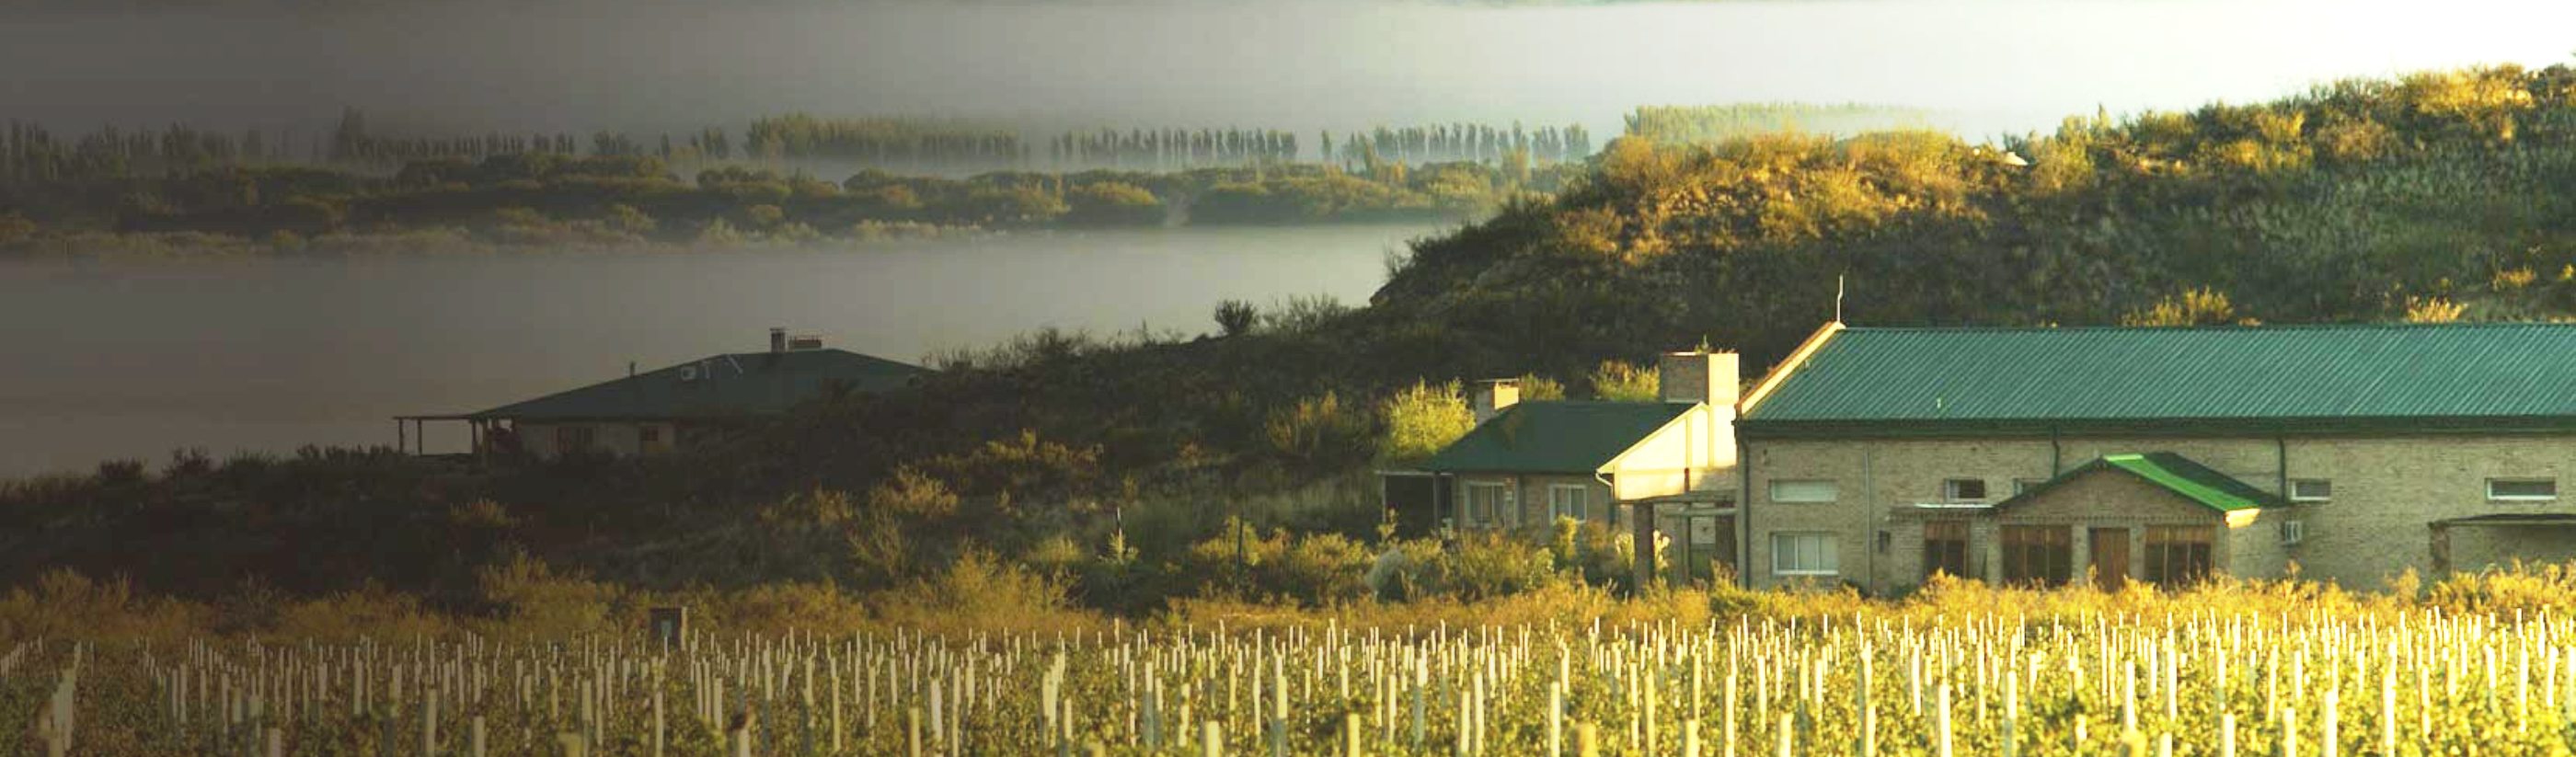 Bodega Noemia vins étrangers vins argentin